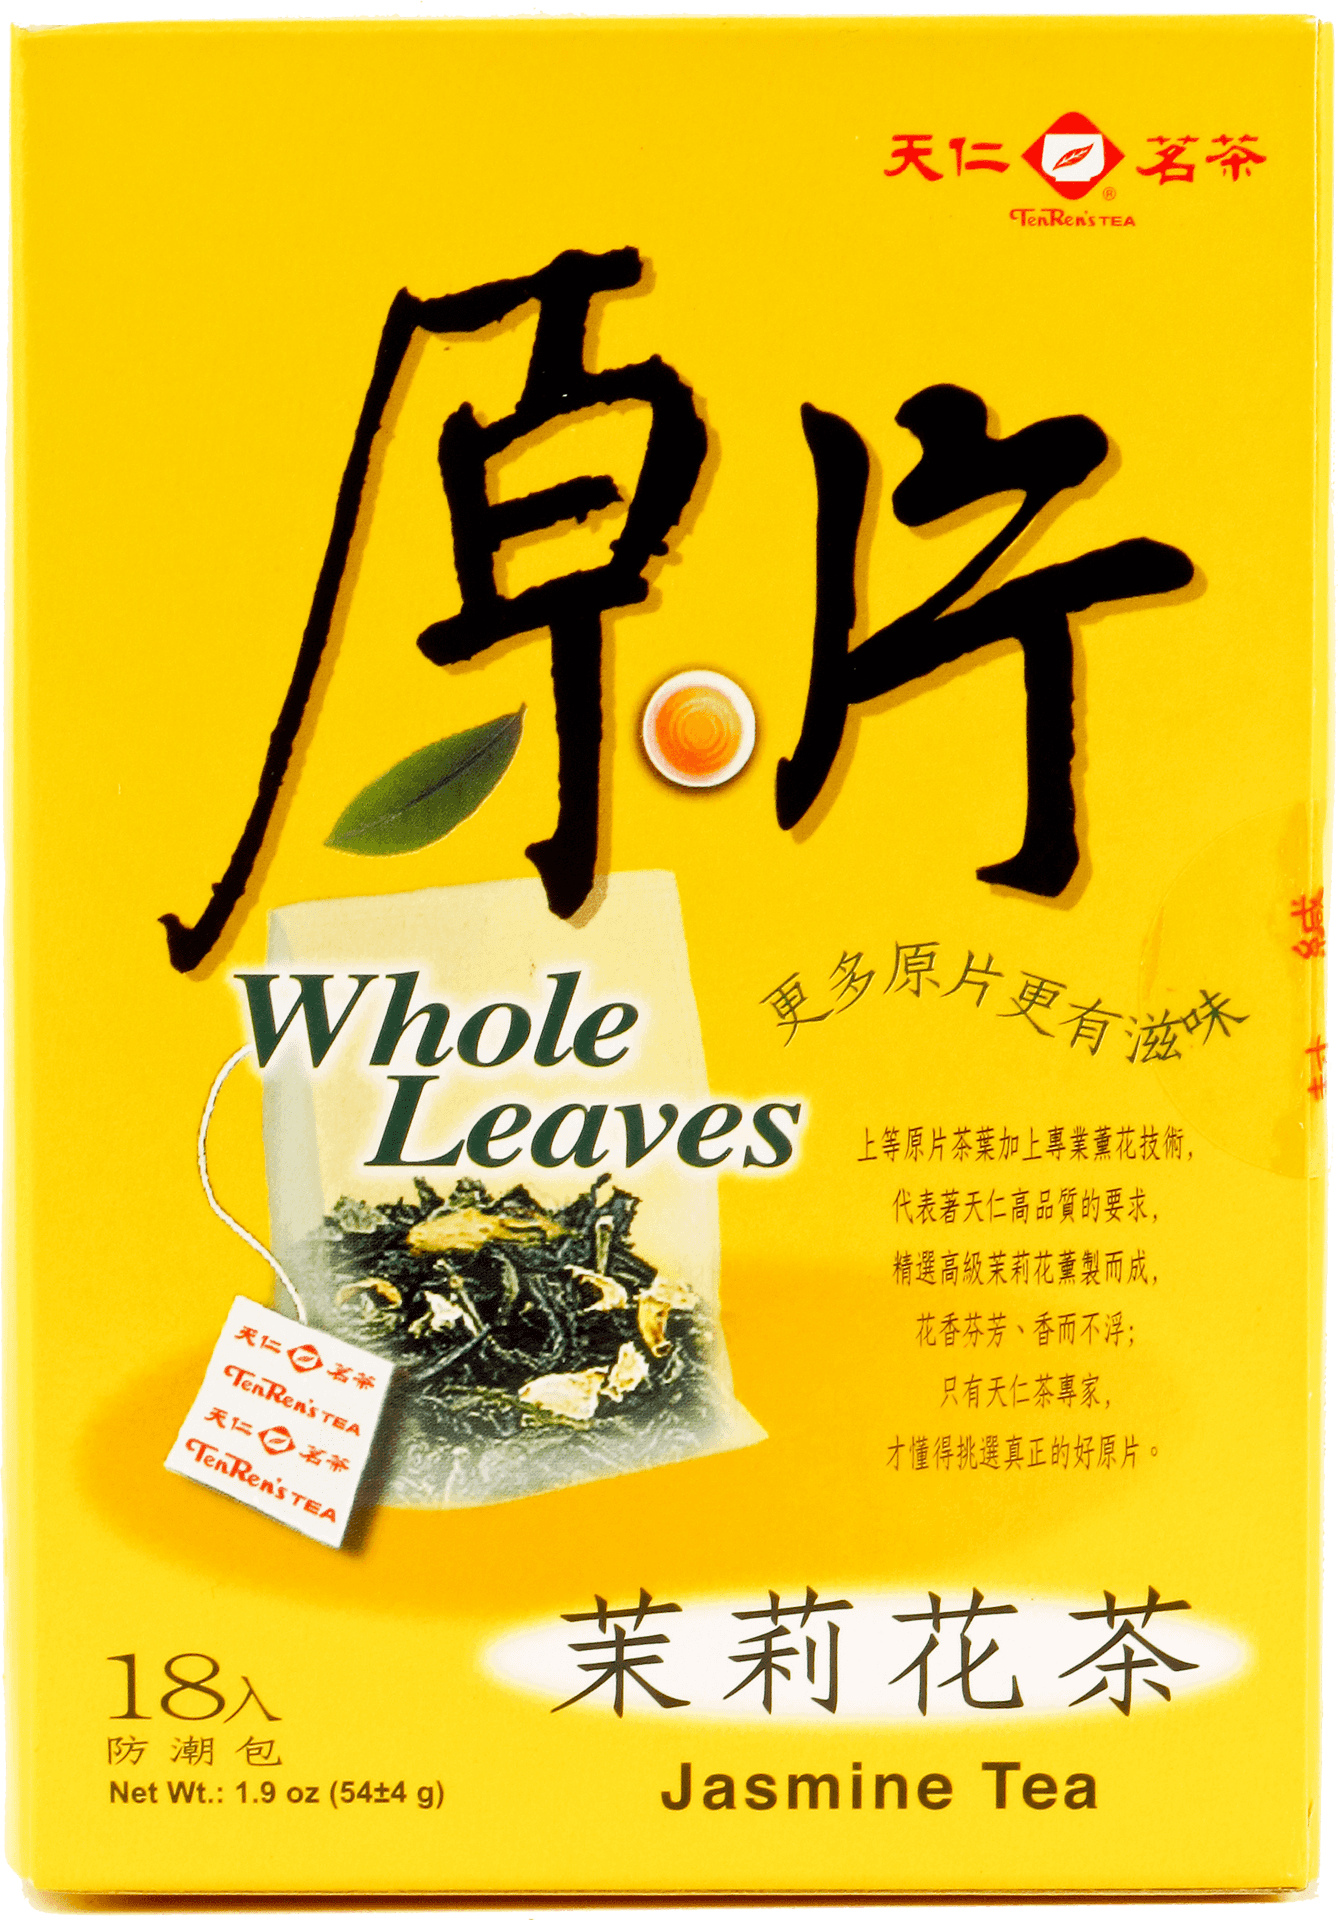 Jasmine Tea Package Whole Leaves PNG image